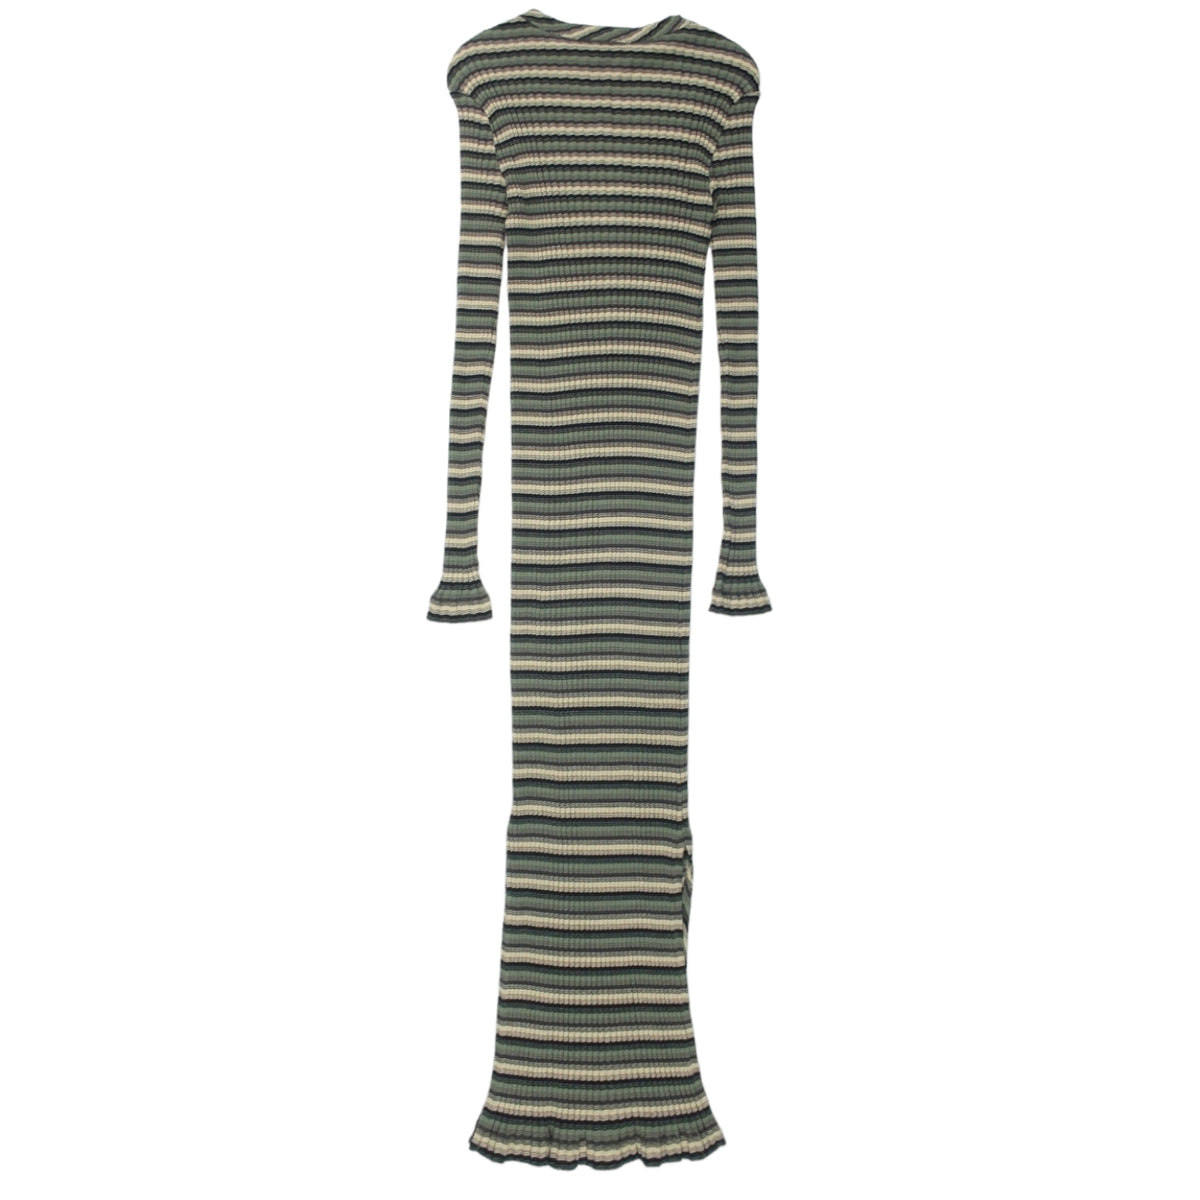 YMC Brown/Green/Cream Stripe Rib Dress